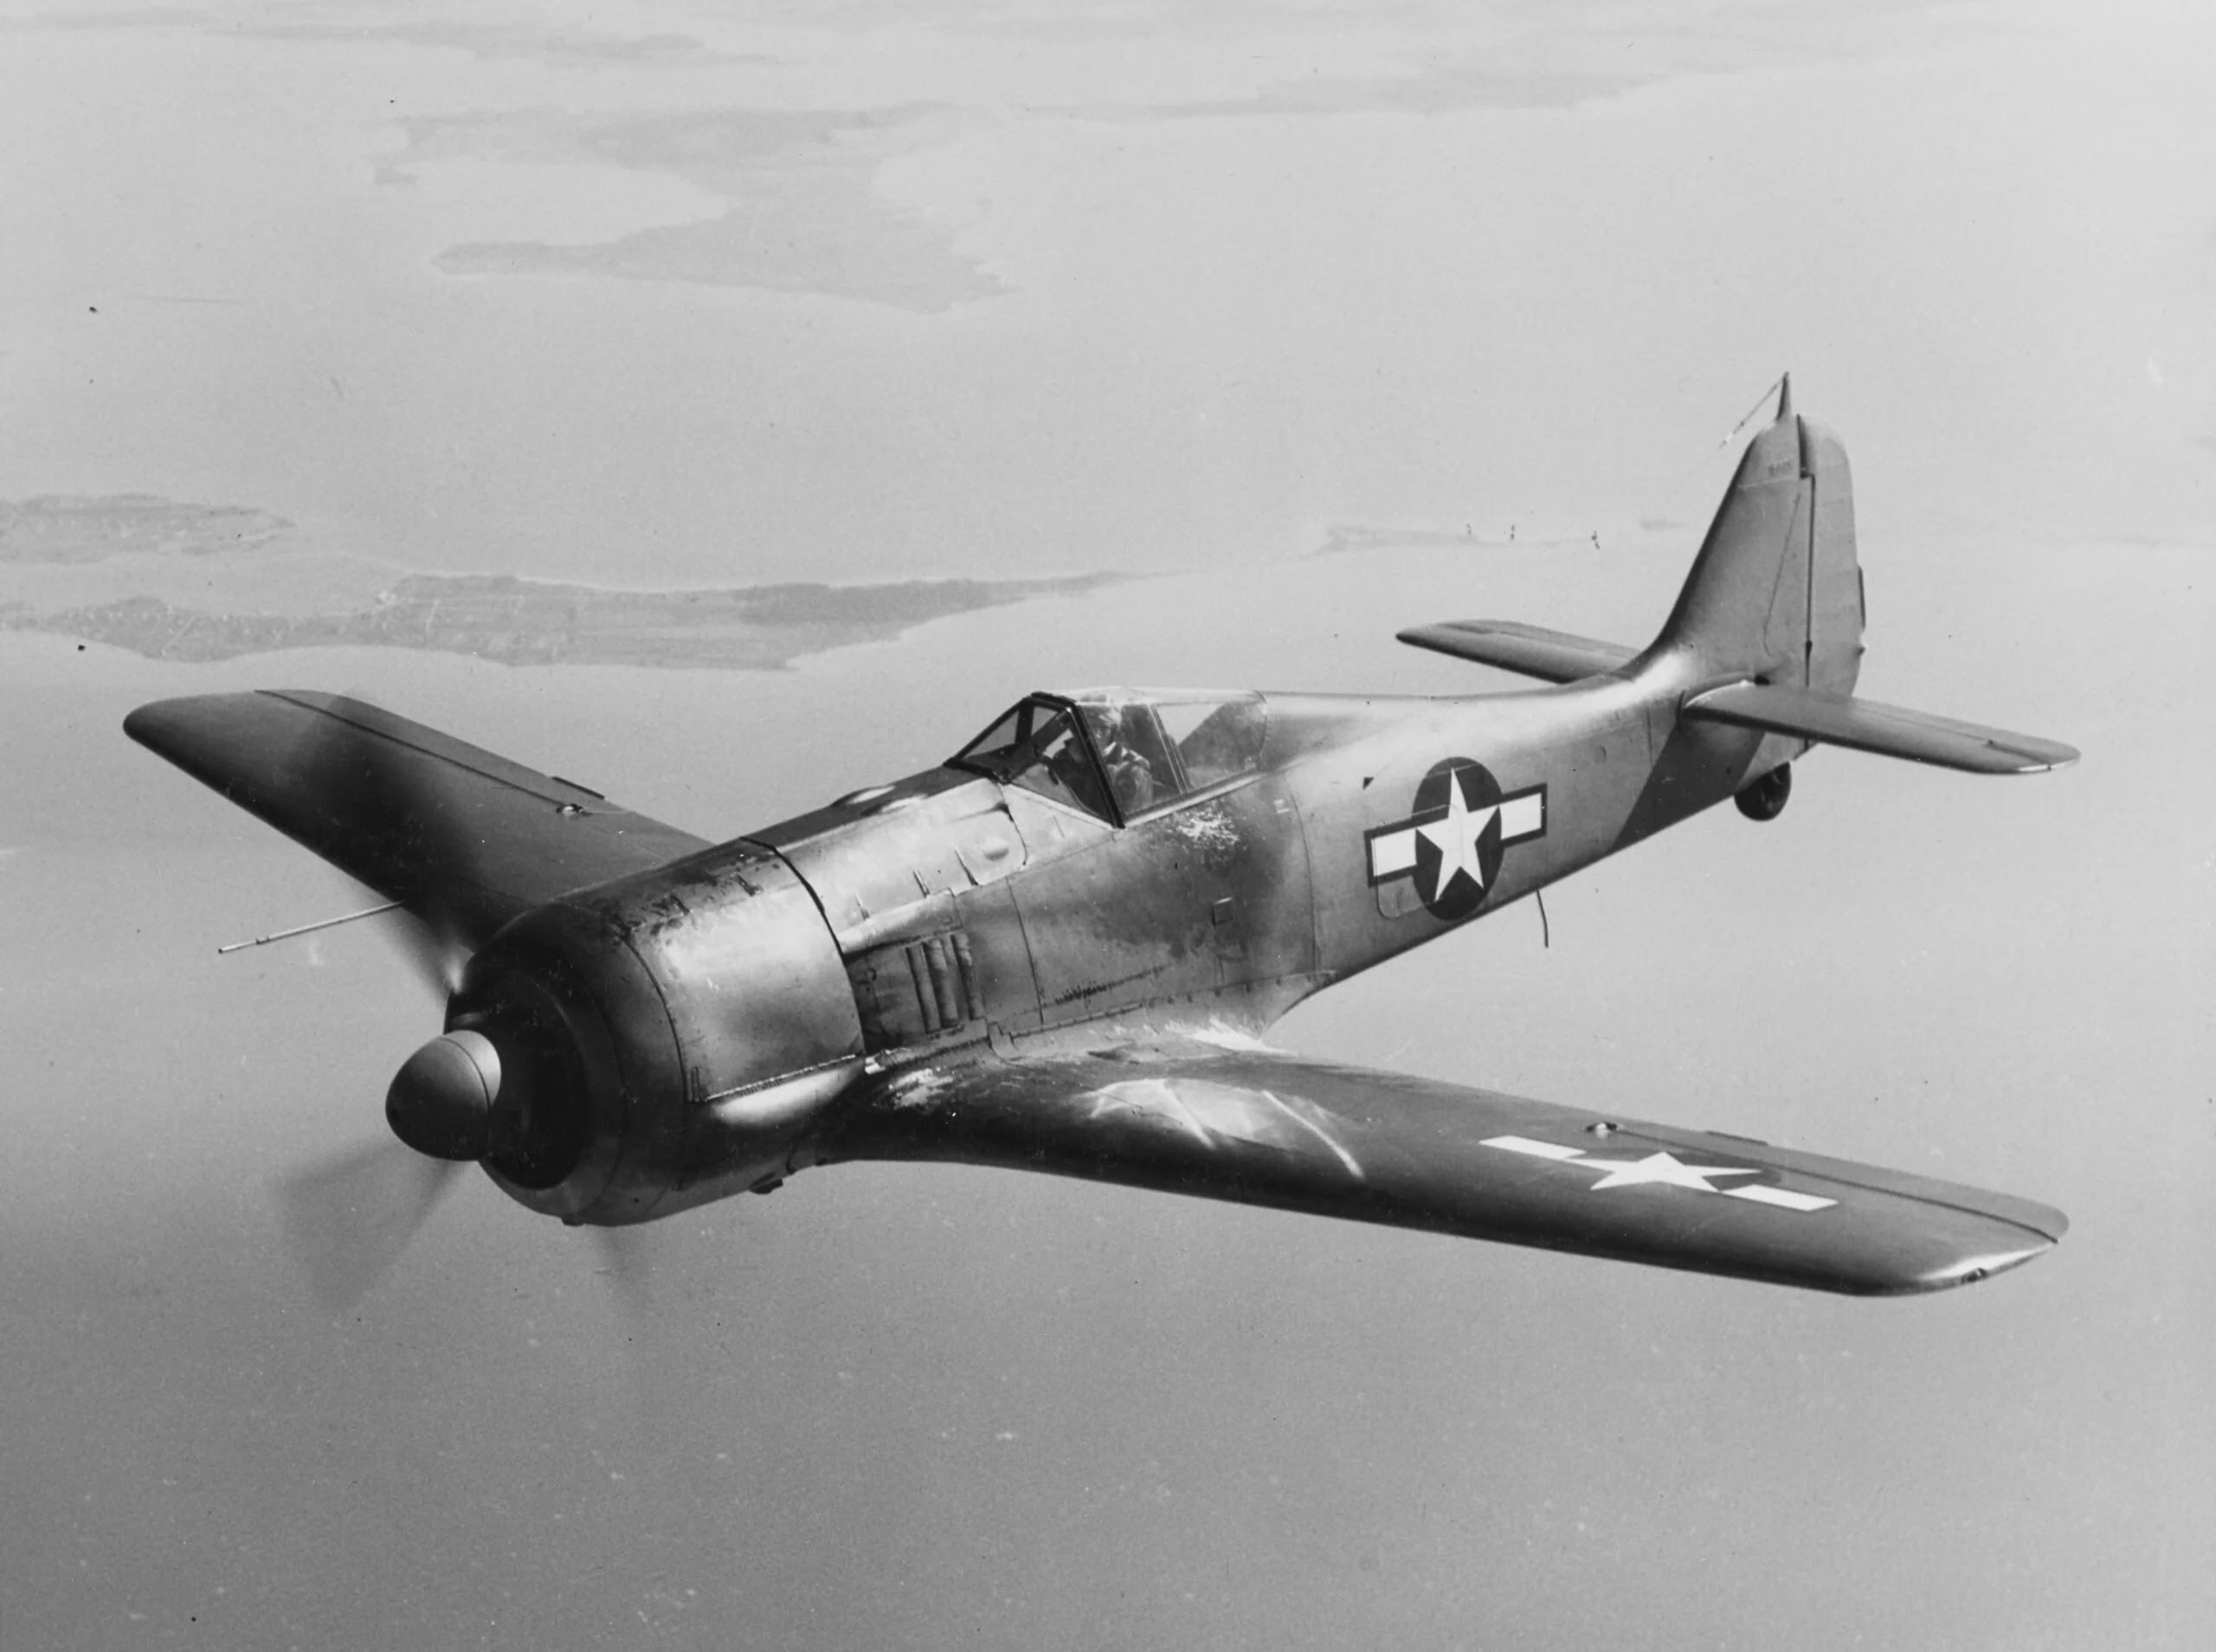 A captured Fw-190